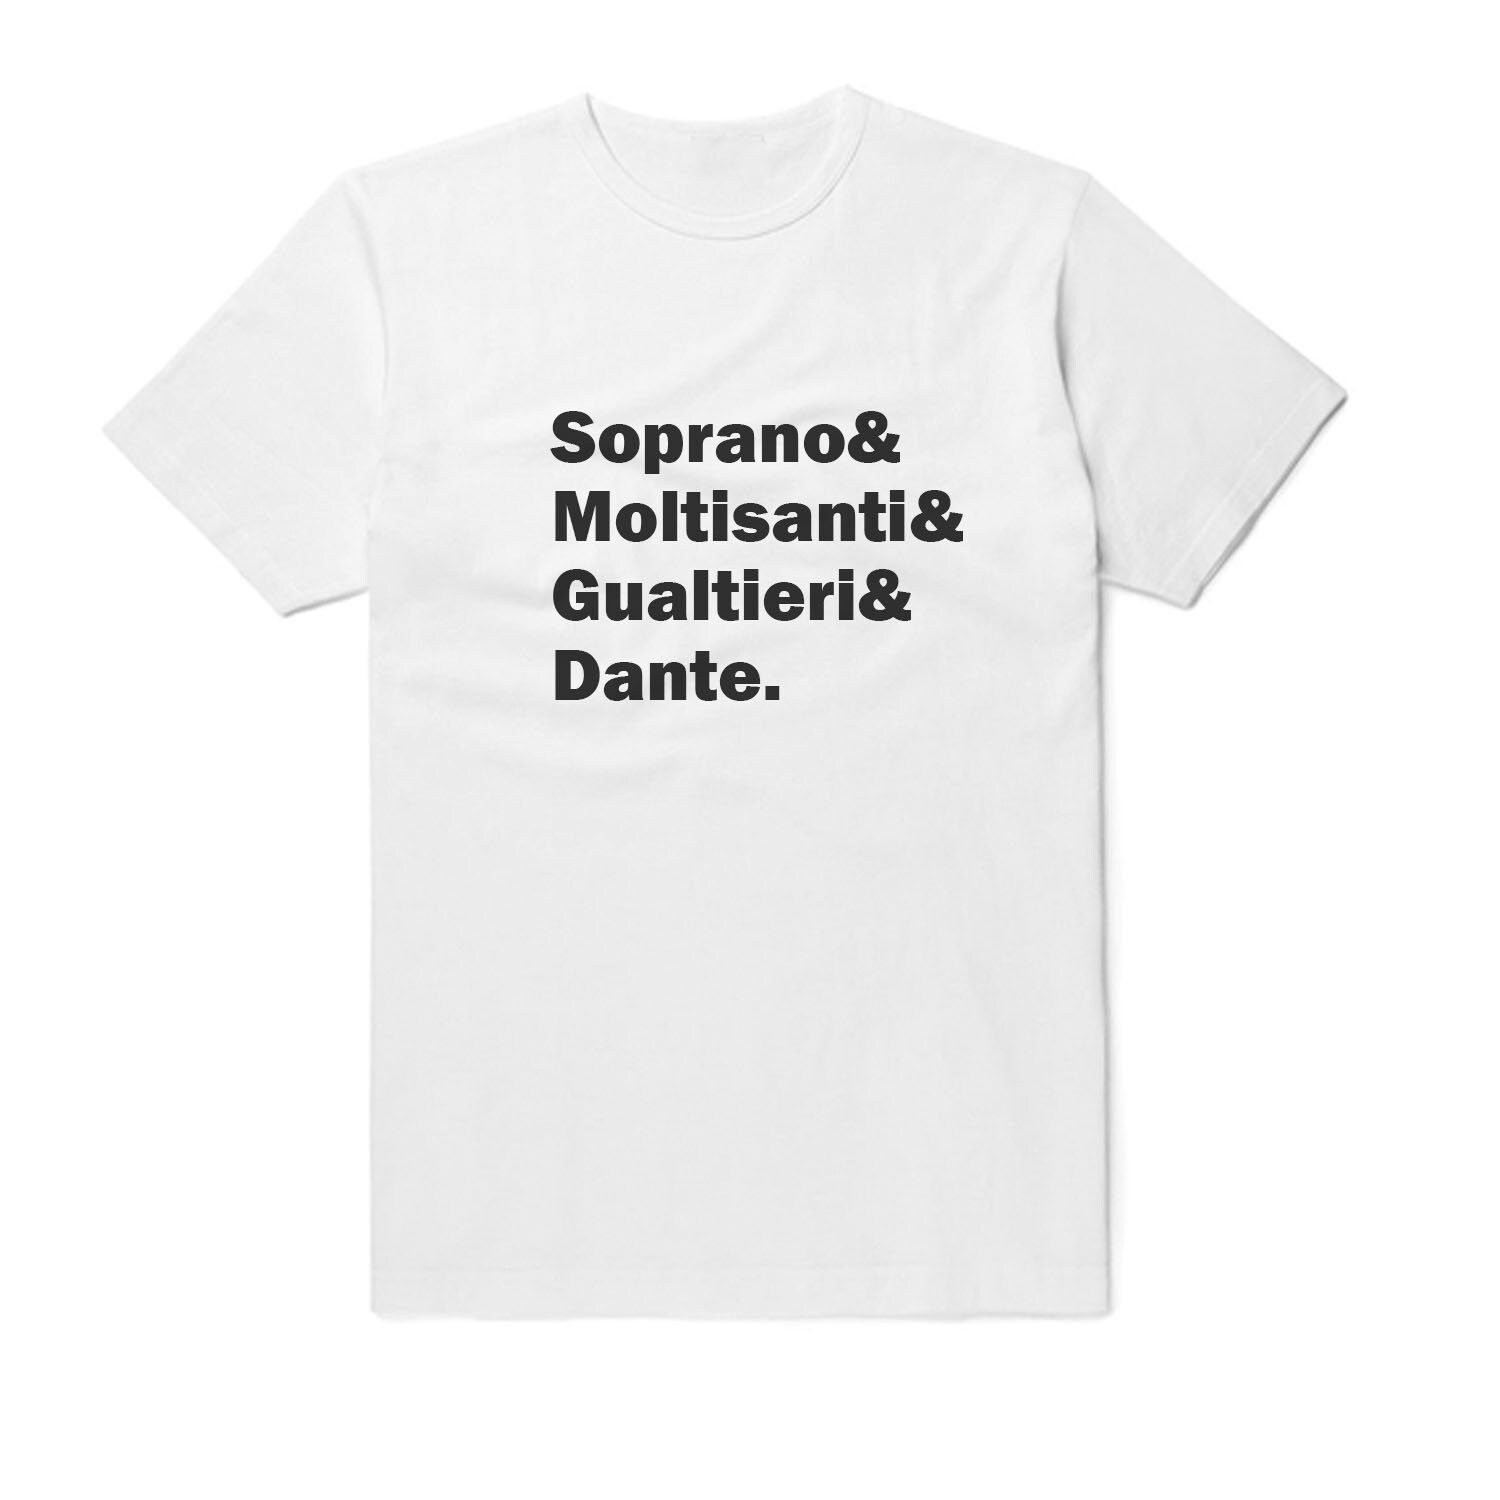 Sopranos Line Up T-Shirt